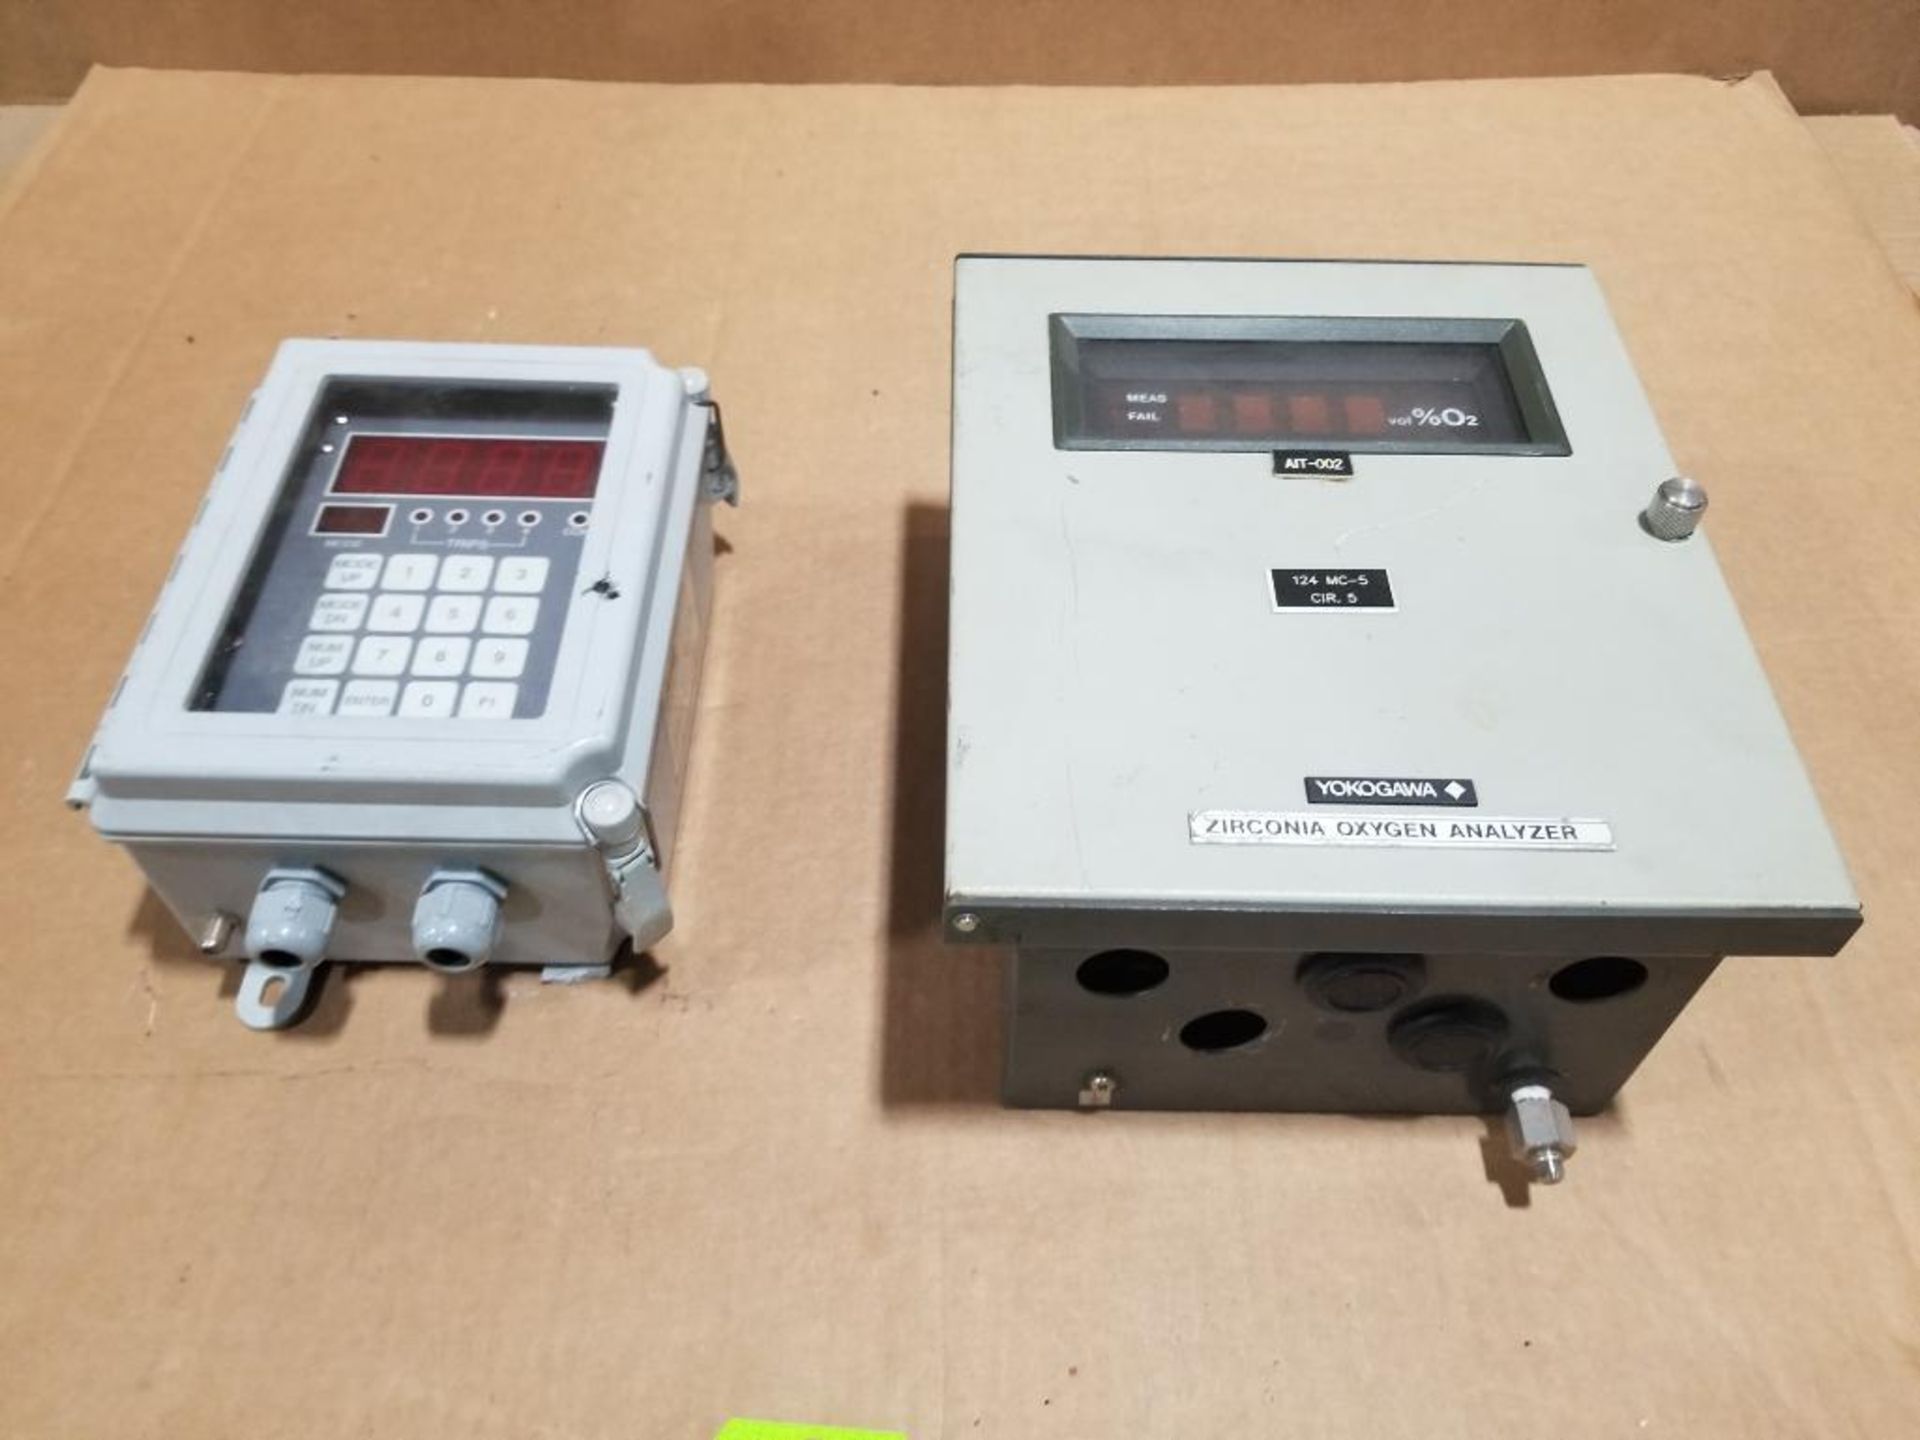 Yokogawa Oxygen analyzer and Lundahl Instruments ultrasonic controller.